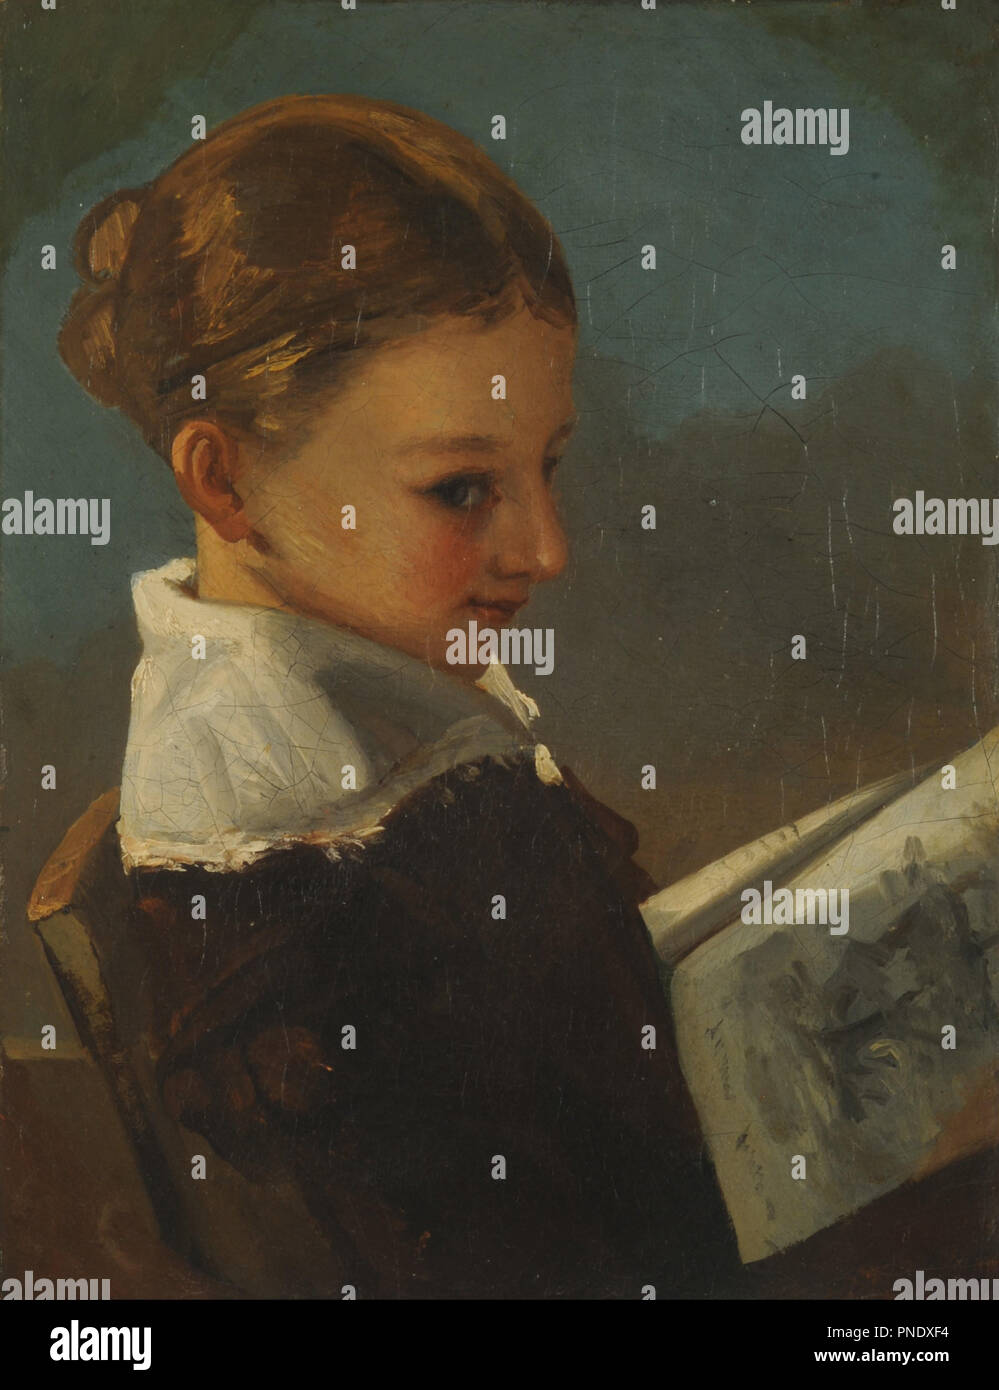 Julieta Courbet a la edad de diez años. Date/Period: Ca. 1841 - ca.1841. Painting. Oil on canvas. Height: 240 mm (9.44 in); Width: 190 mm (7.48 in). Stock Photo